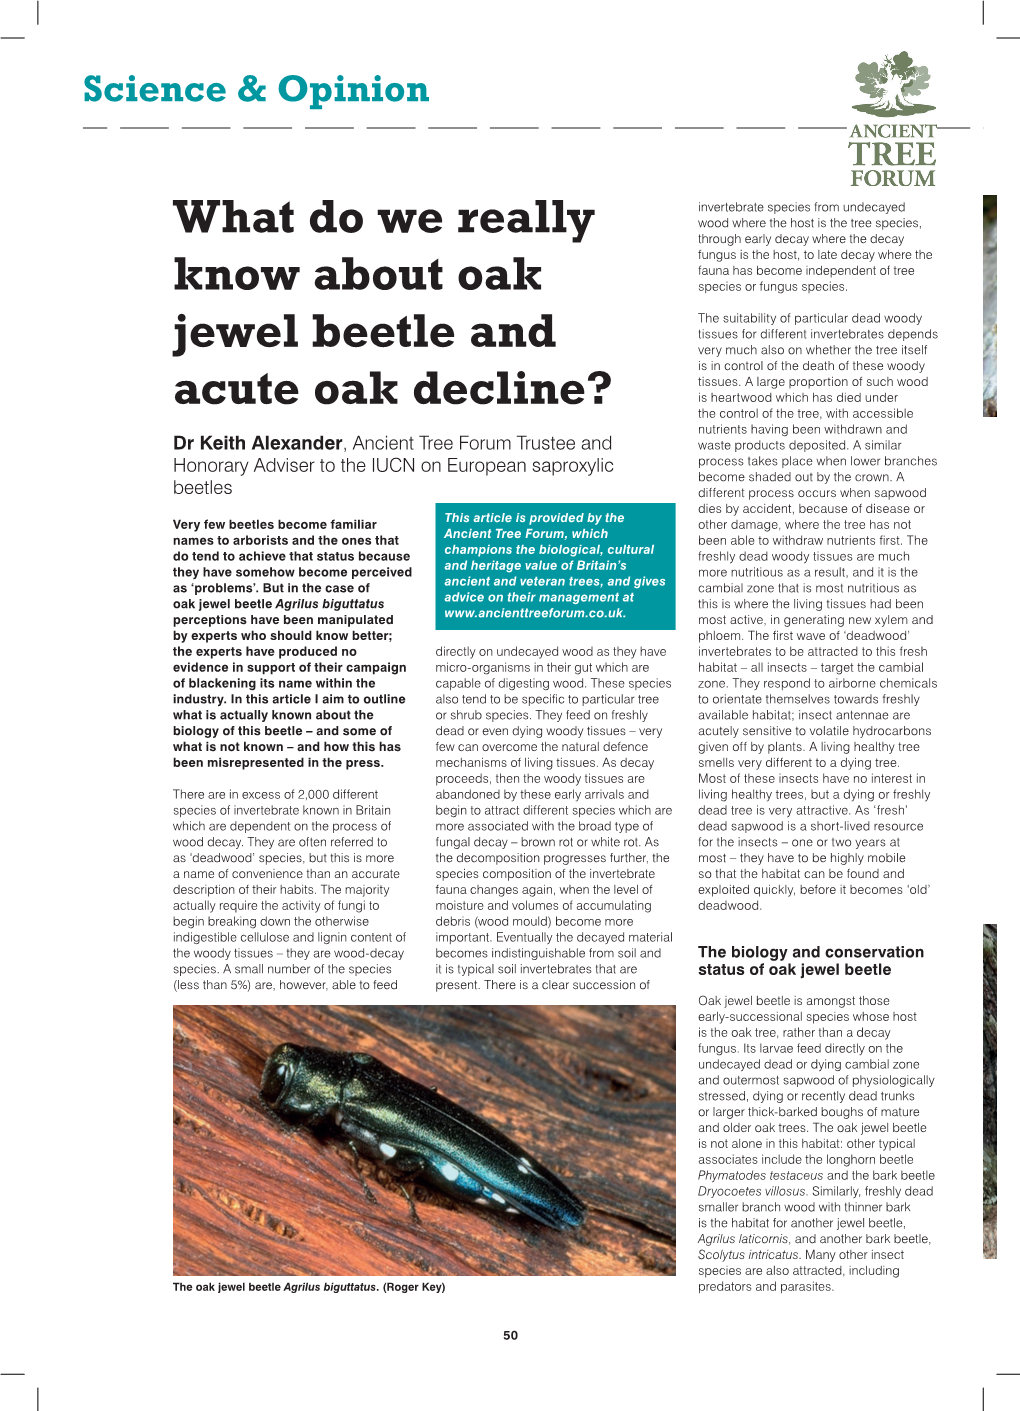 Oak Jewel Beetle and Acute Oak Decline